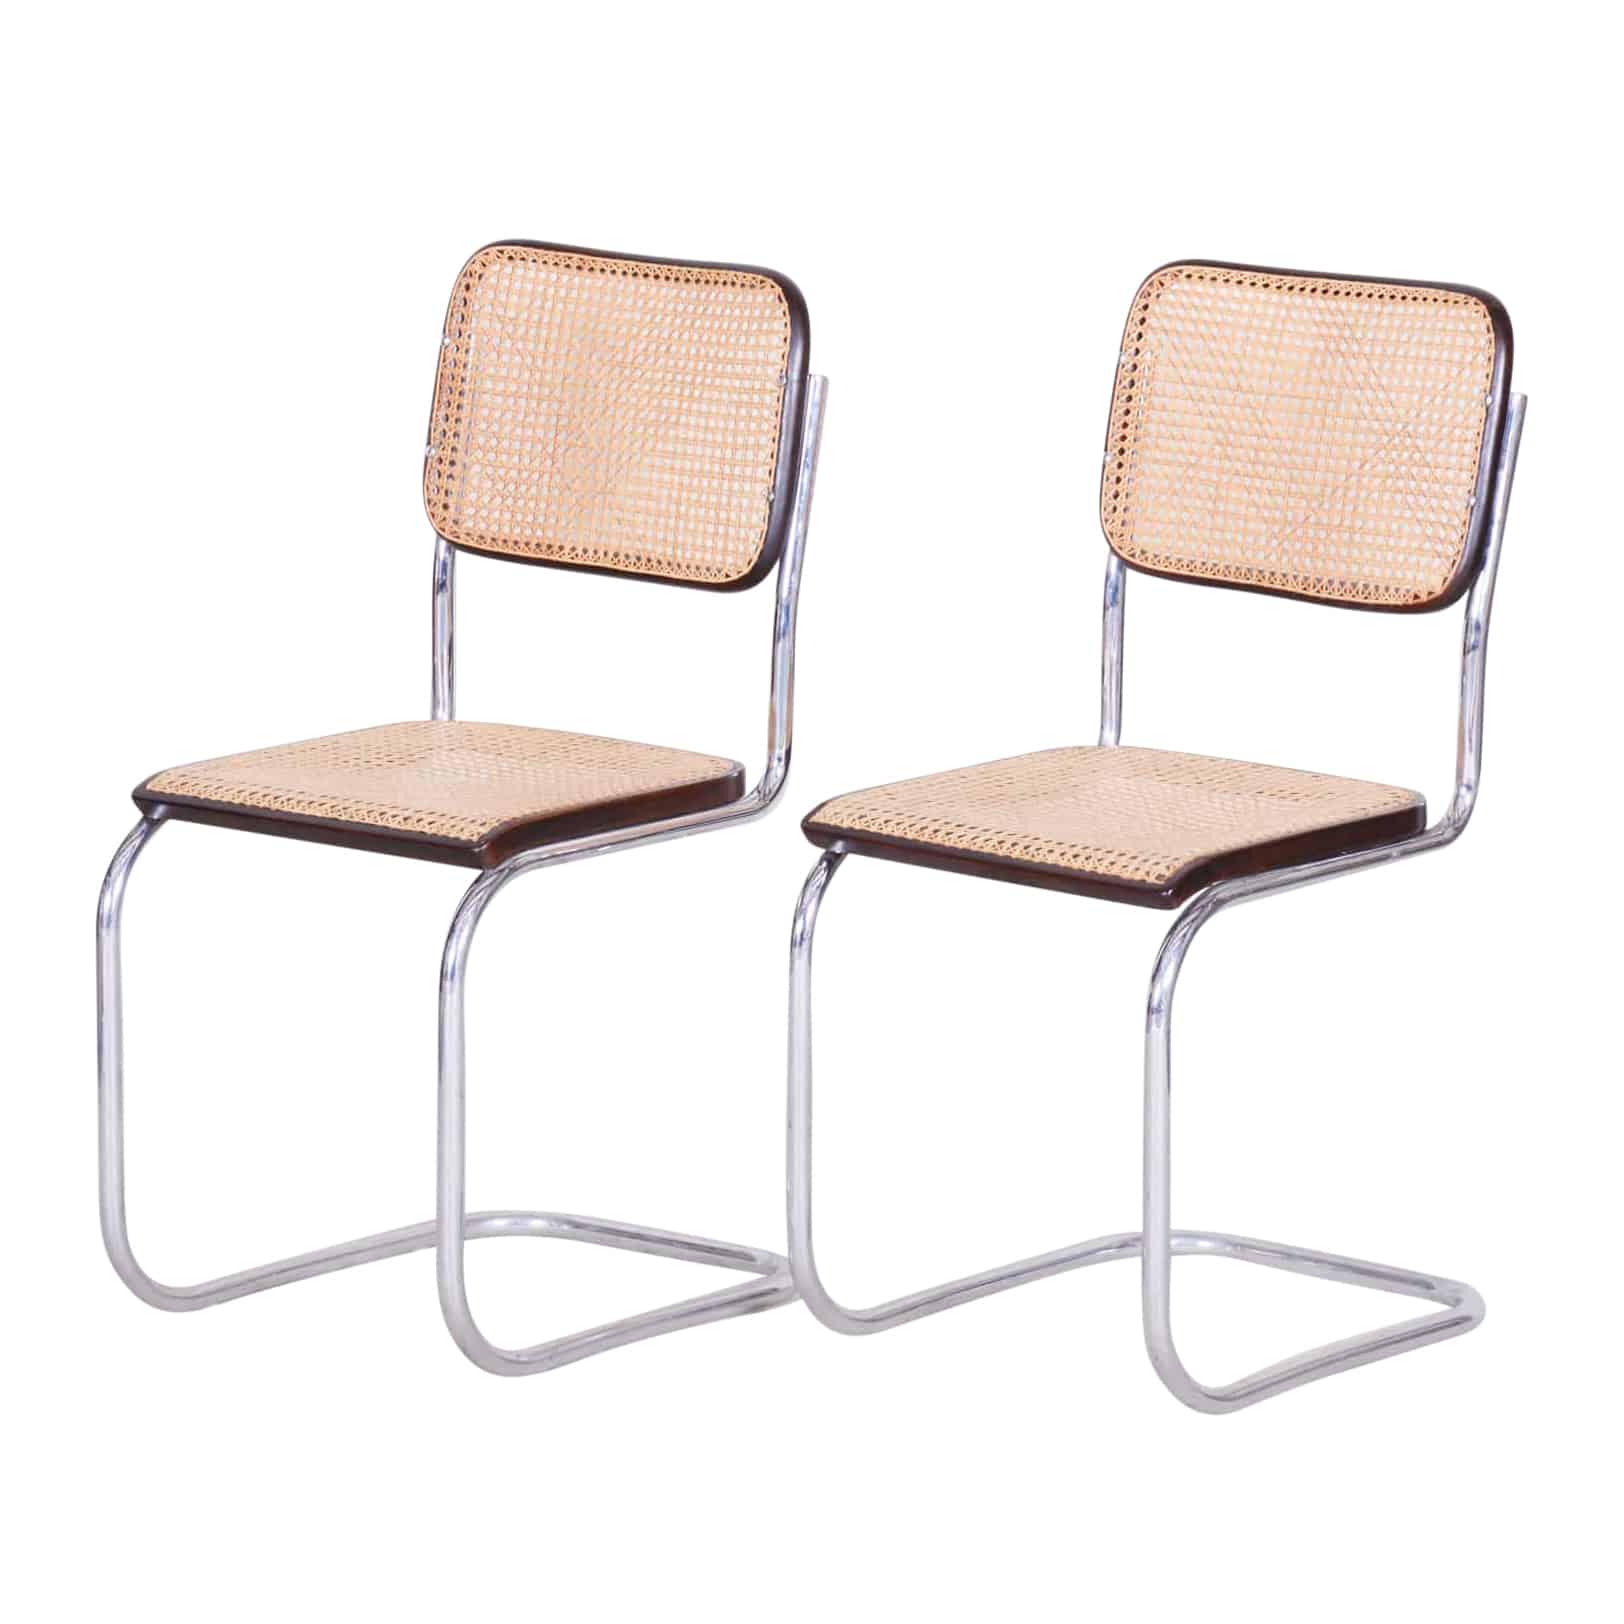 Marcel Breuer Chairs- rattan and metall- styylish